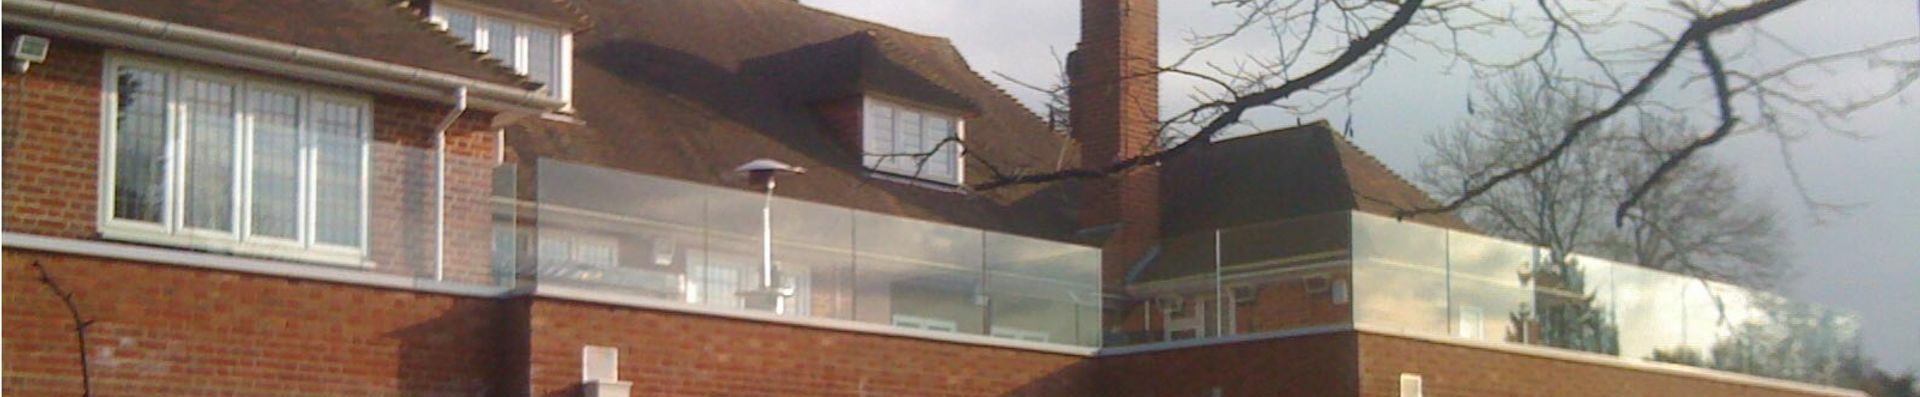 Balcony Balustrade in Glass